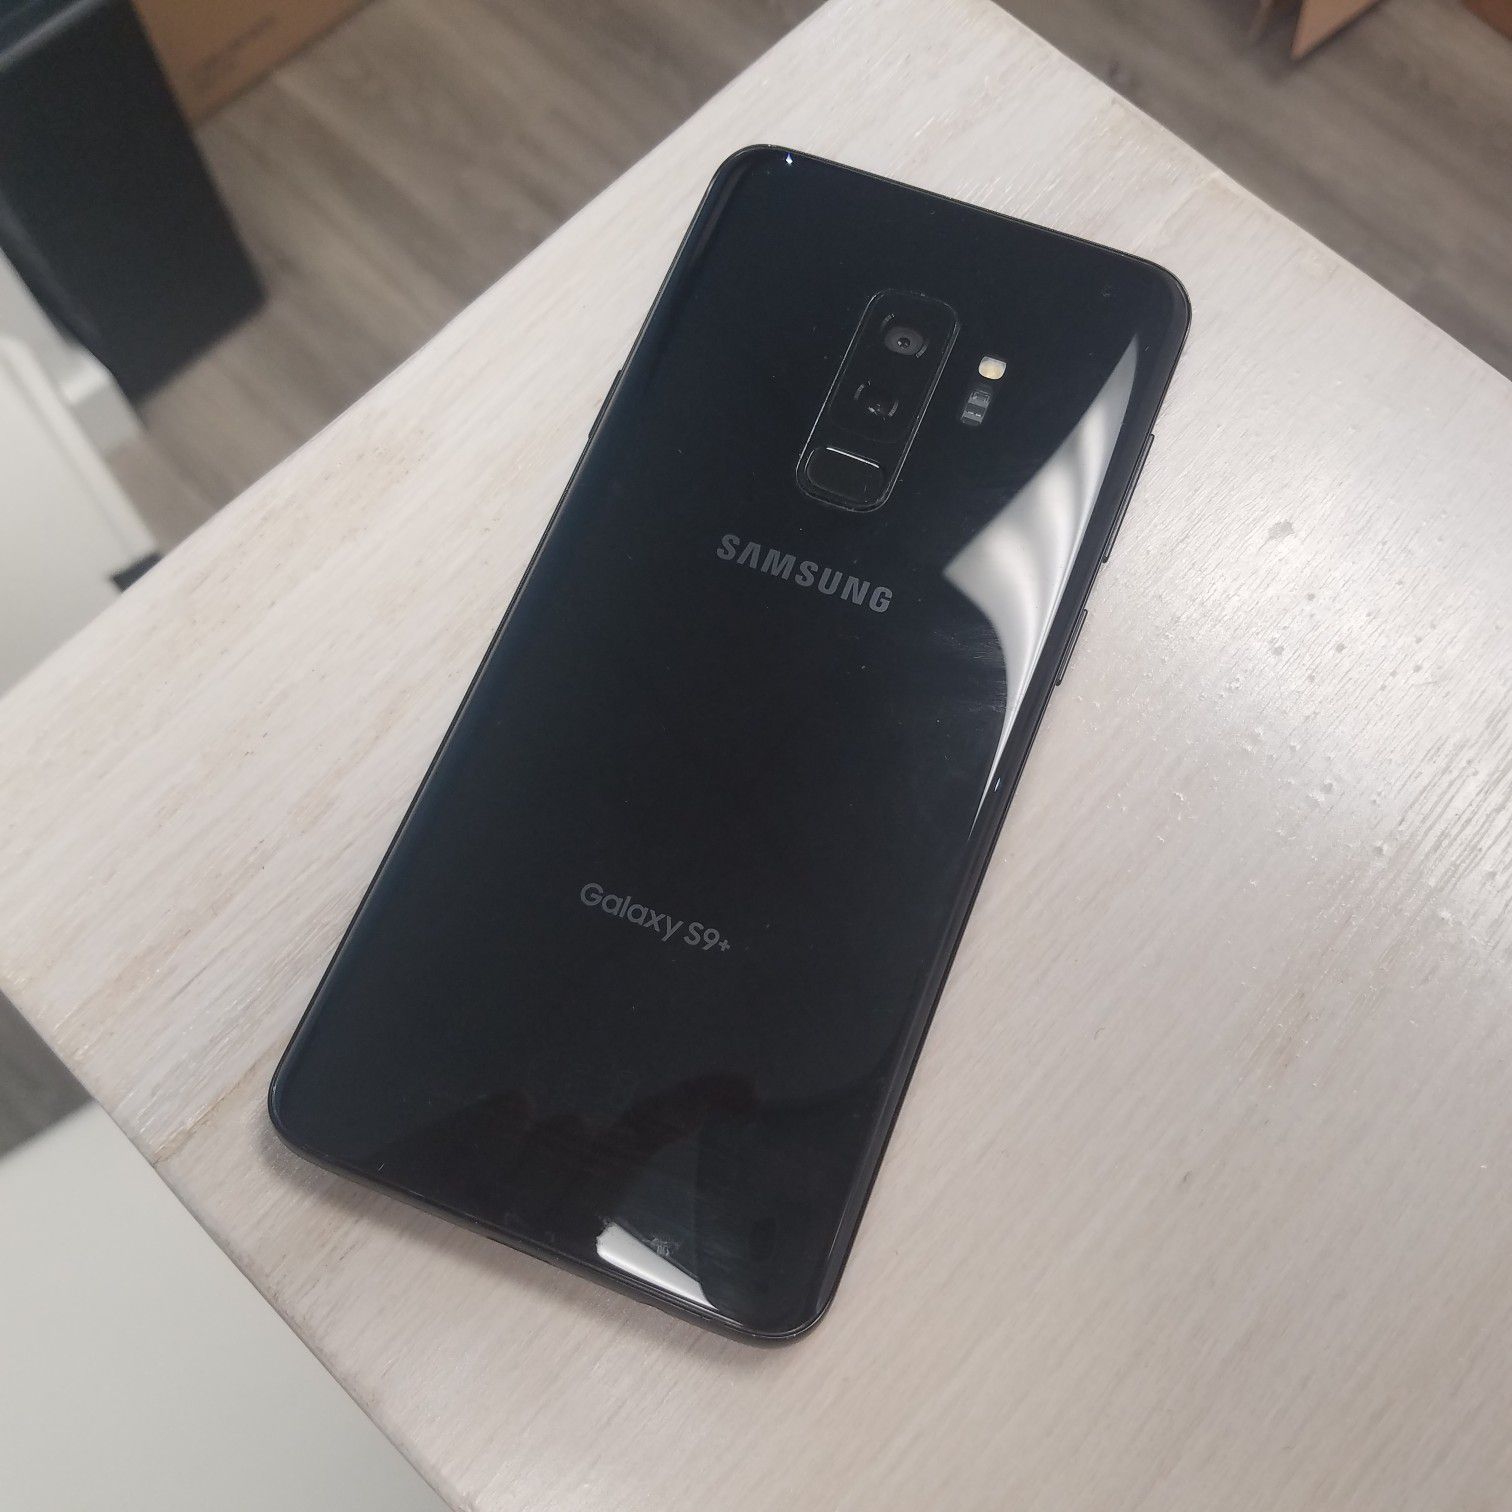 Samsung Galaxy s9 plus 128GB UNLOCKED